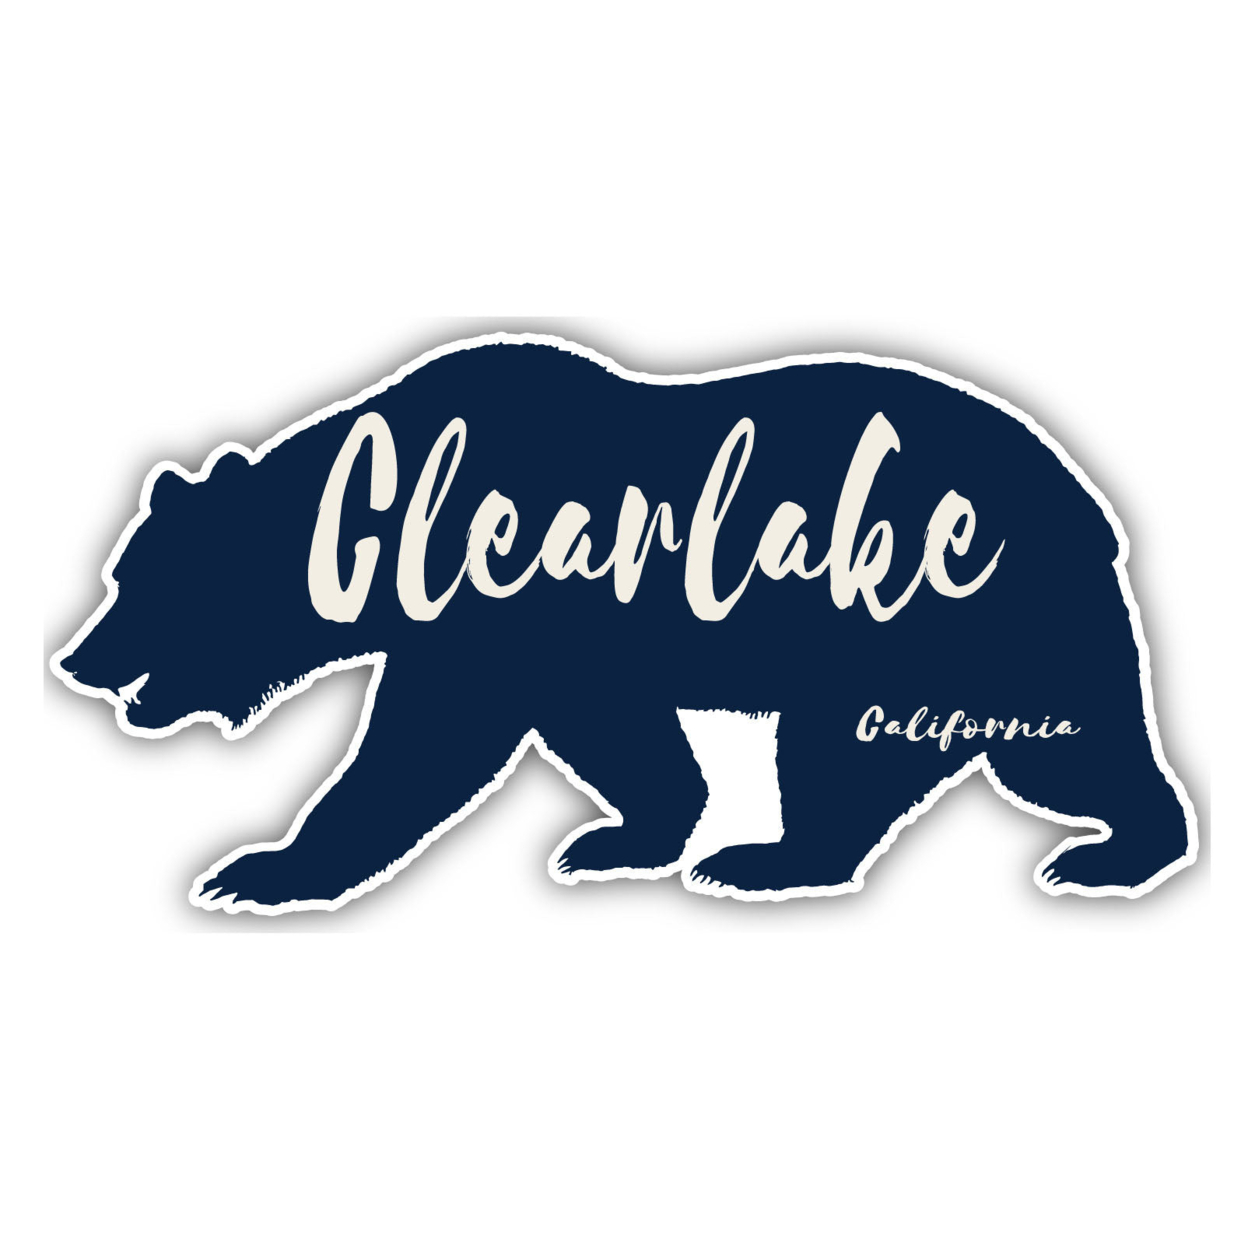 Clearlake California Souvenir Decorative Stickers (Choose Theme And Size) - Single Unit, 8-Inch, Tent